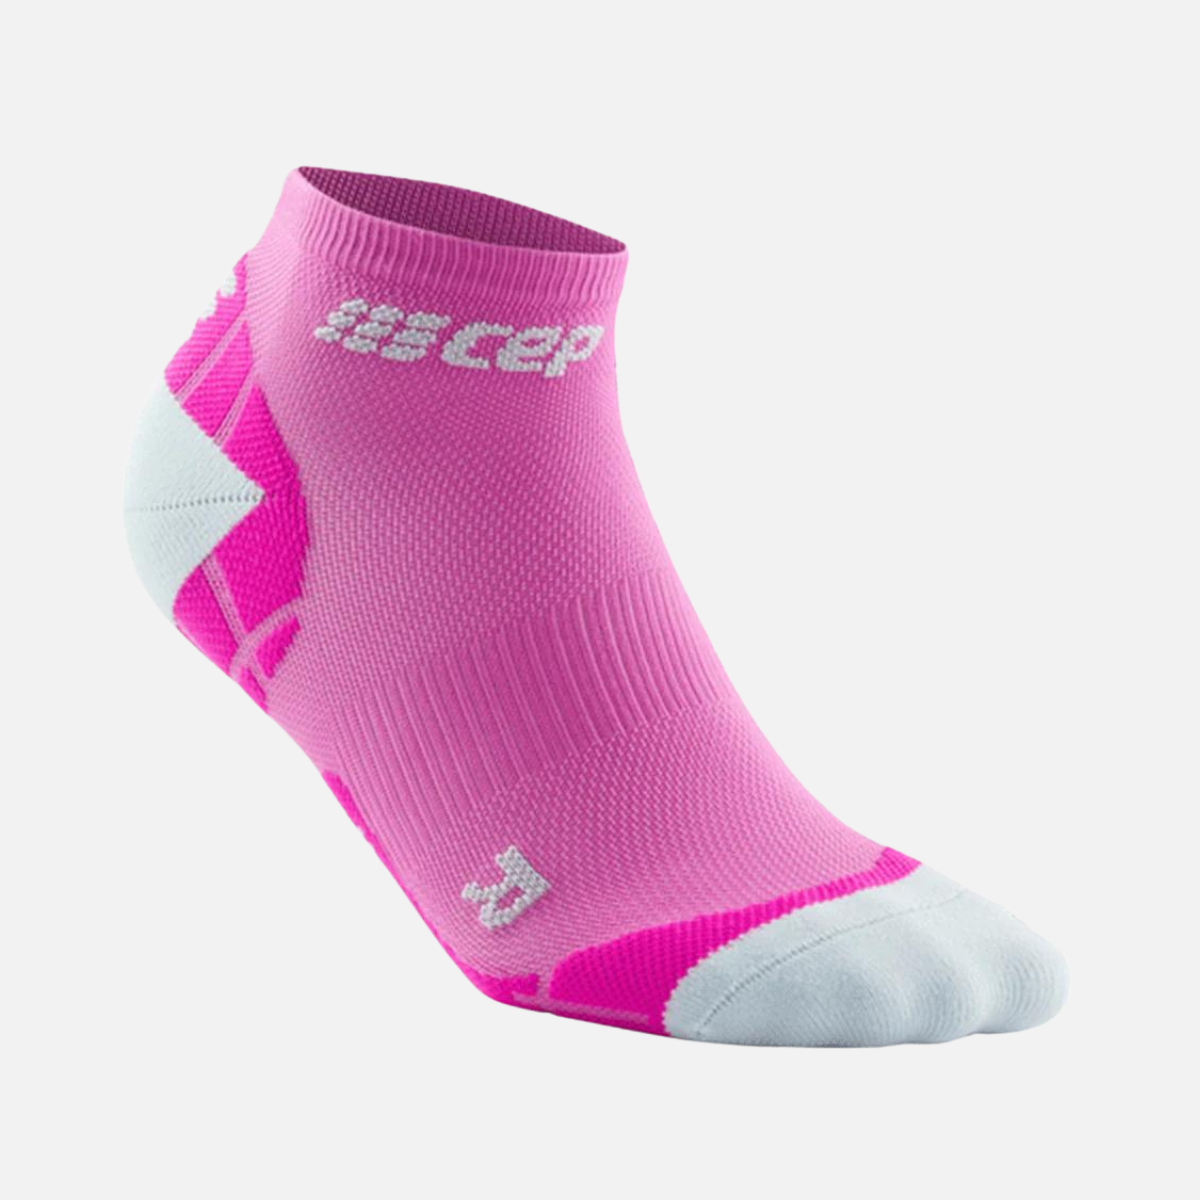 Cep Ultralight Compression Low-cut Women's Socks -Pink/Grey